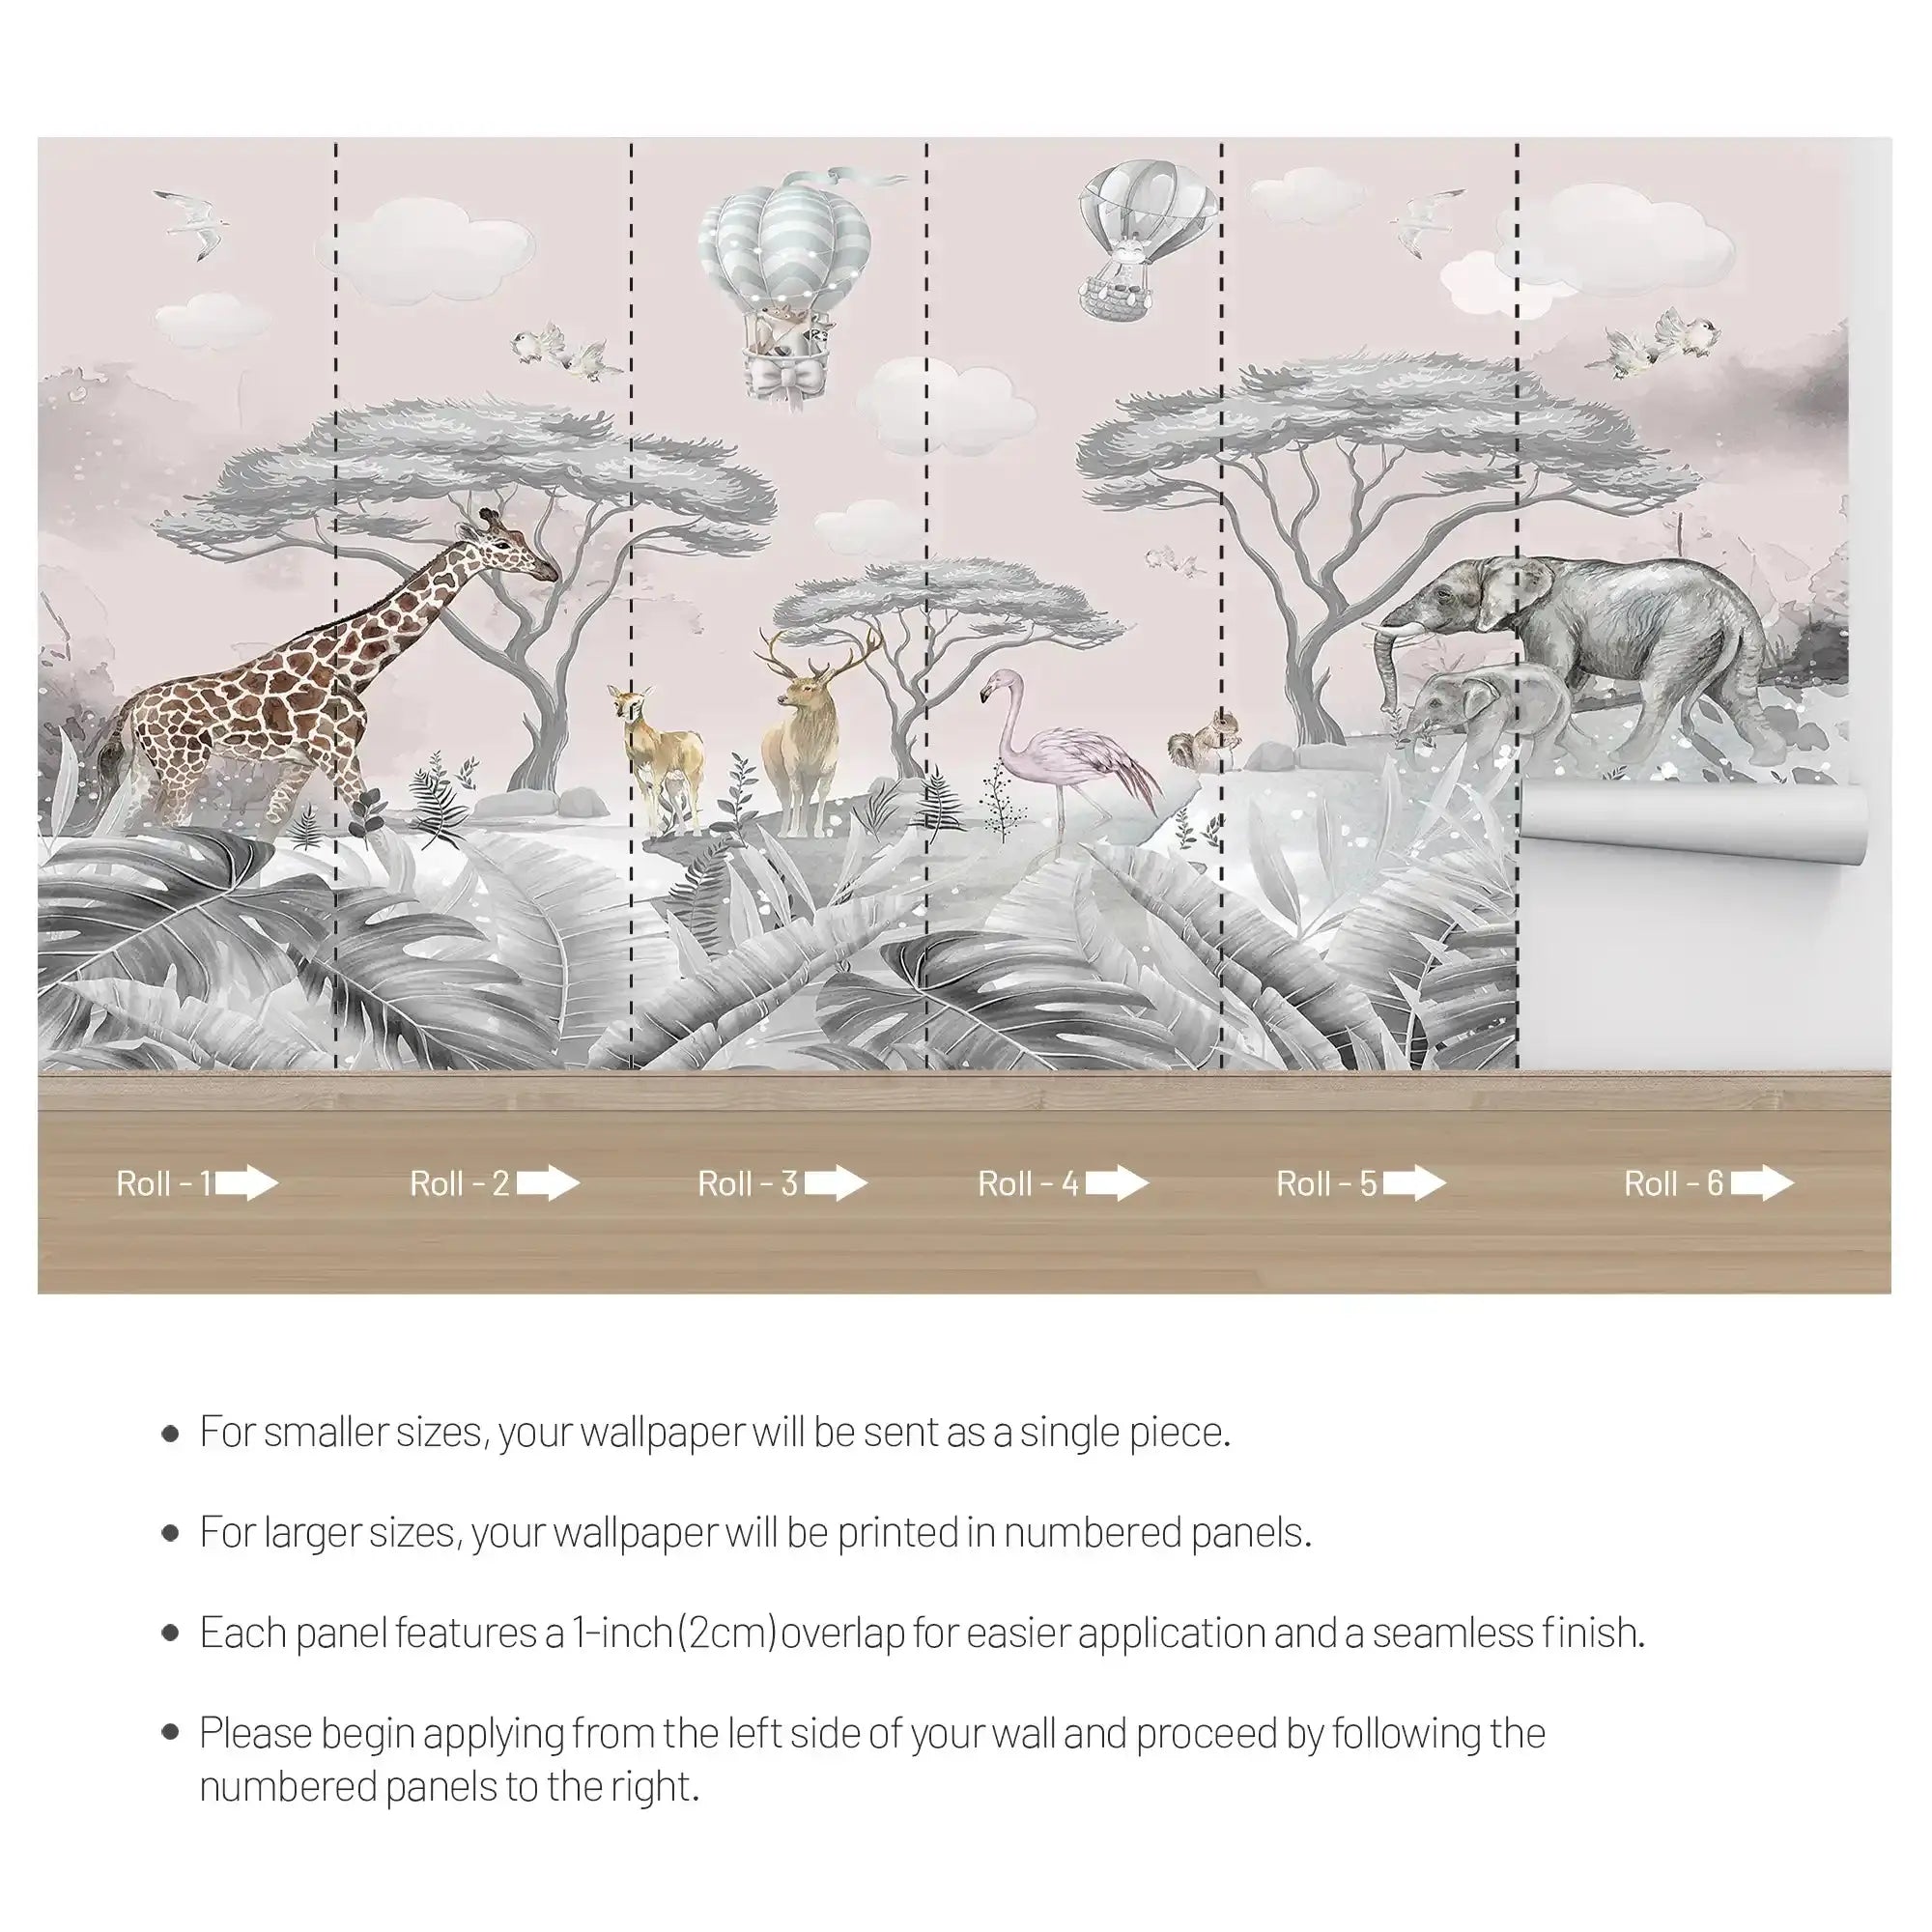 6014 / Boho Kids Room Decor: White Forest Animals Wallpaper with Pink Elephants and Giraffes Theme - Artevella